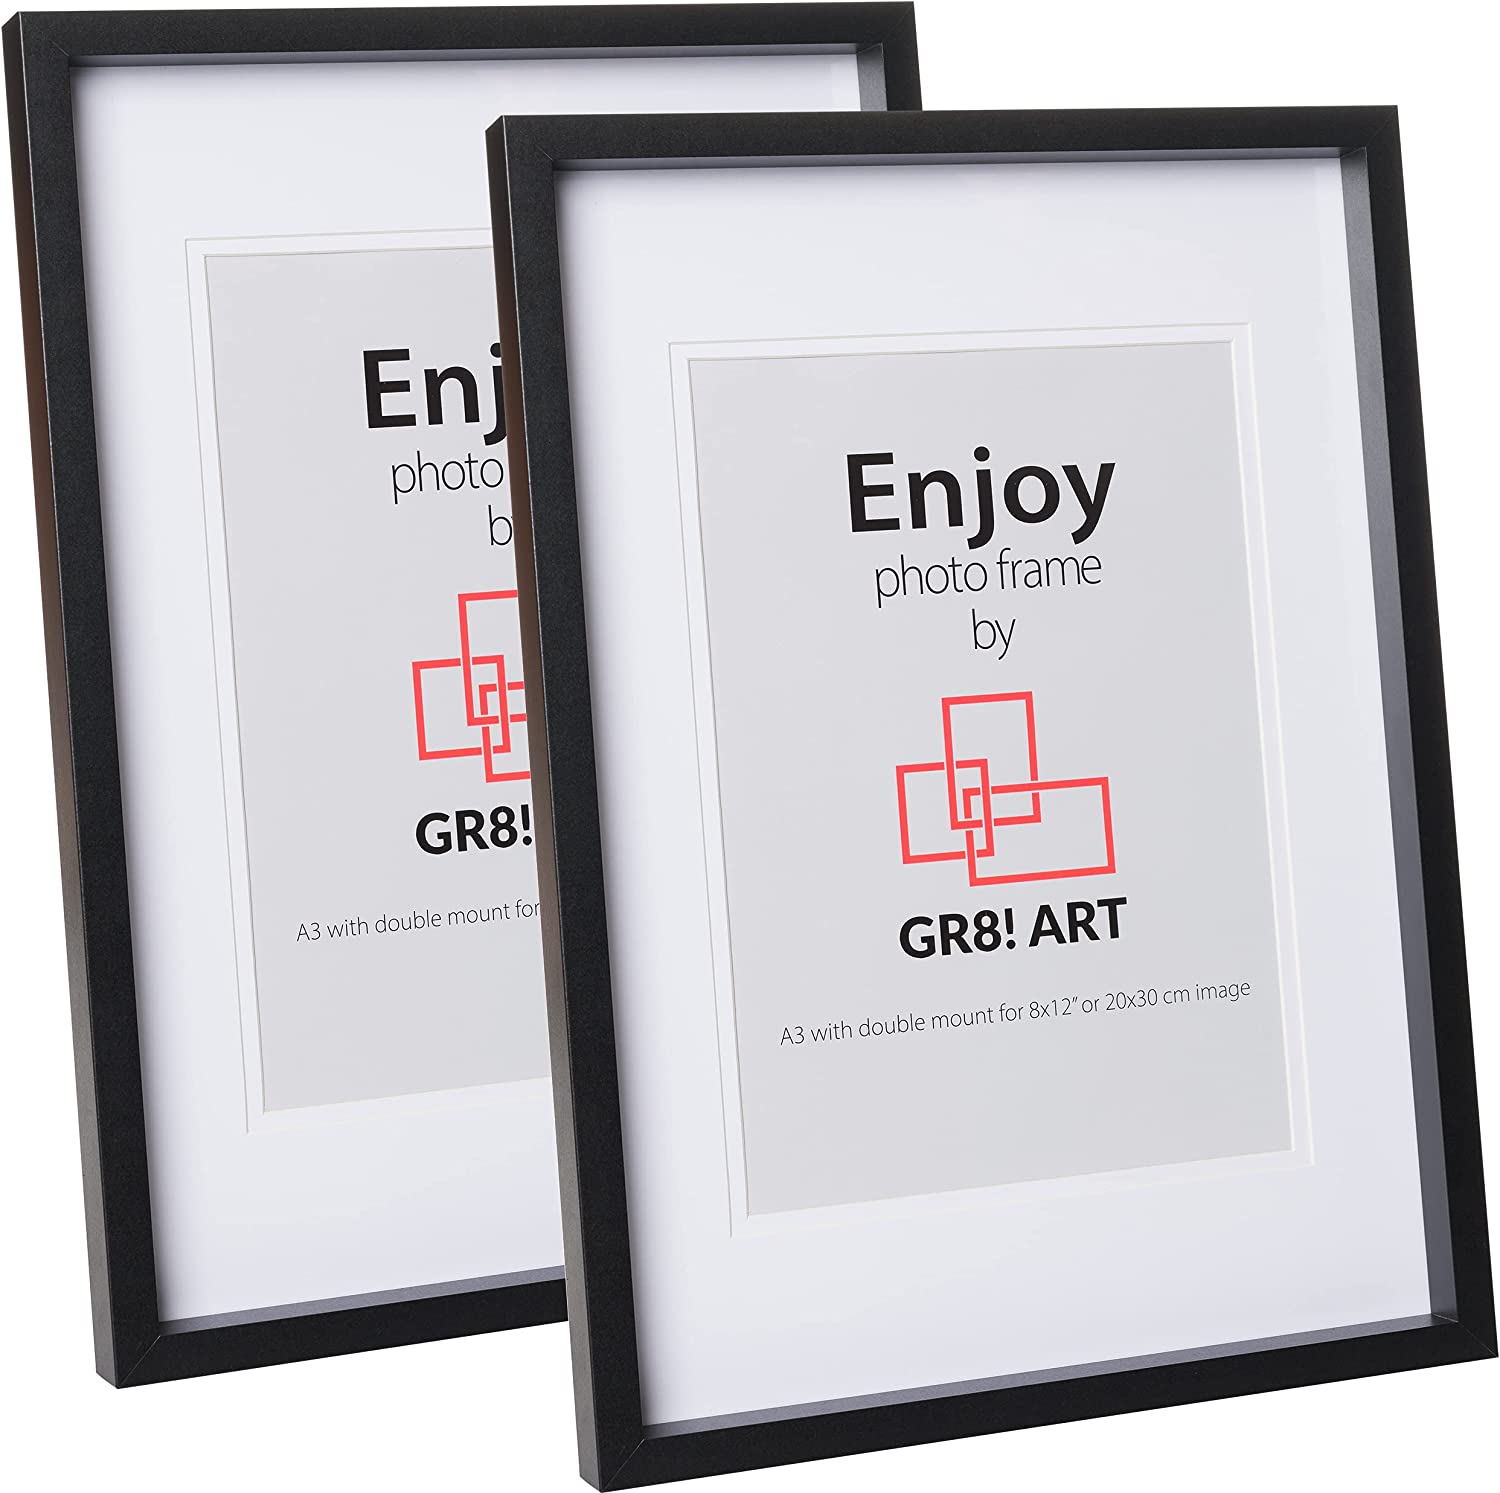 Gr8! Art Enjoy Black Photo Frame 2 Pack 8 x 12 Inch 20 x 30cm RRP 29.99 CLEARANCE XL 4.99